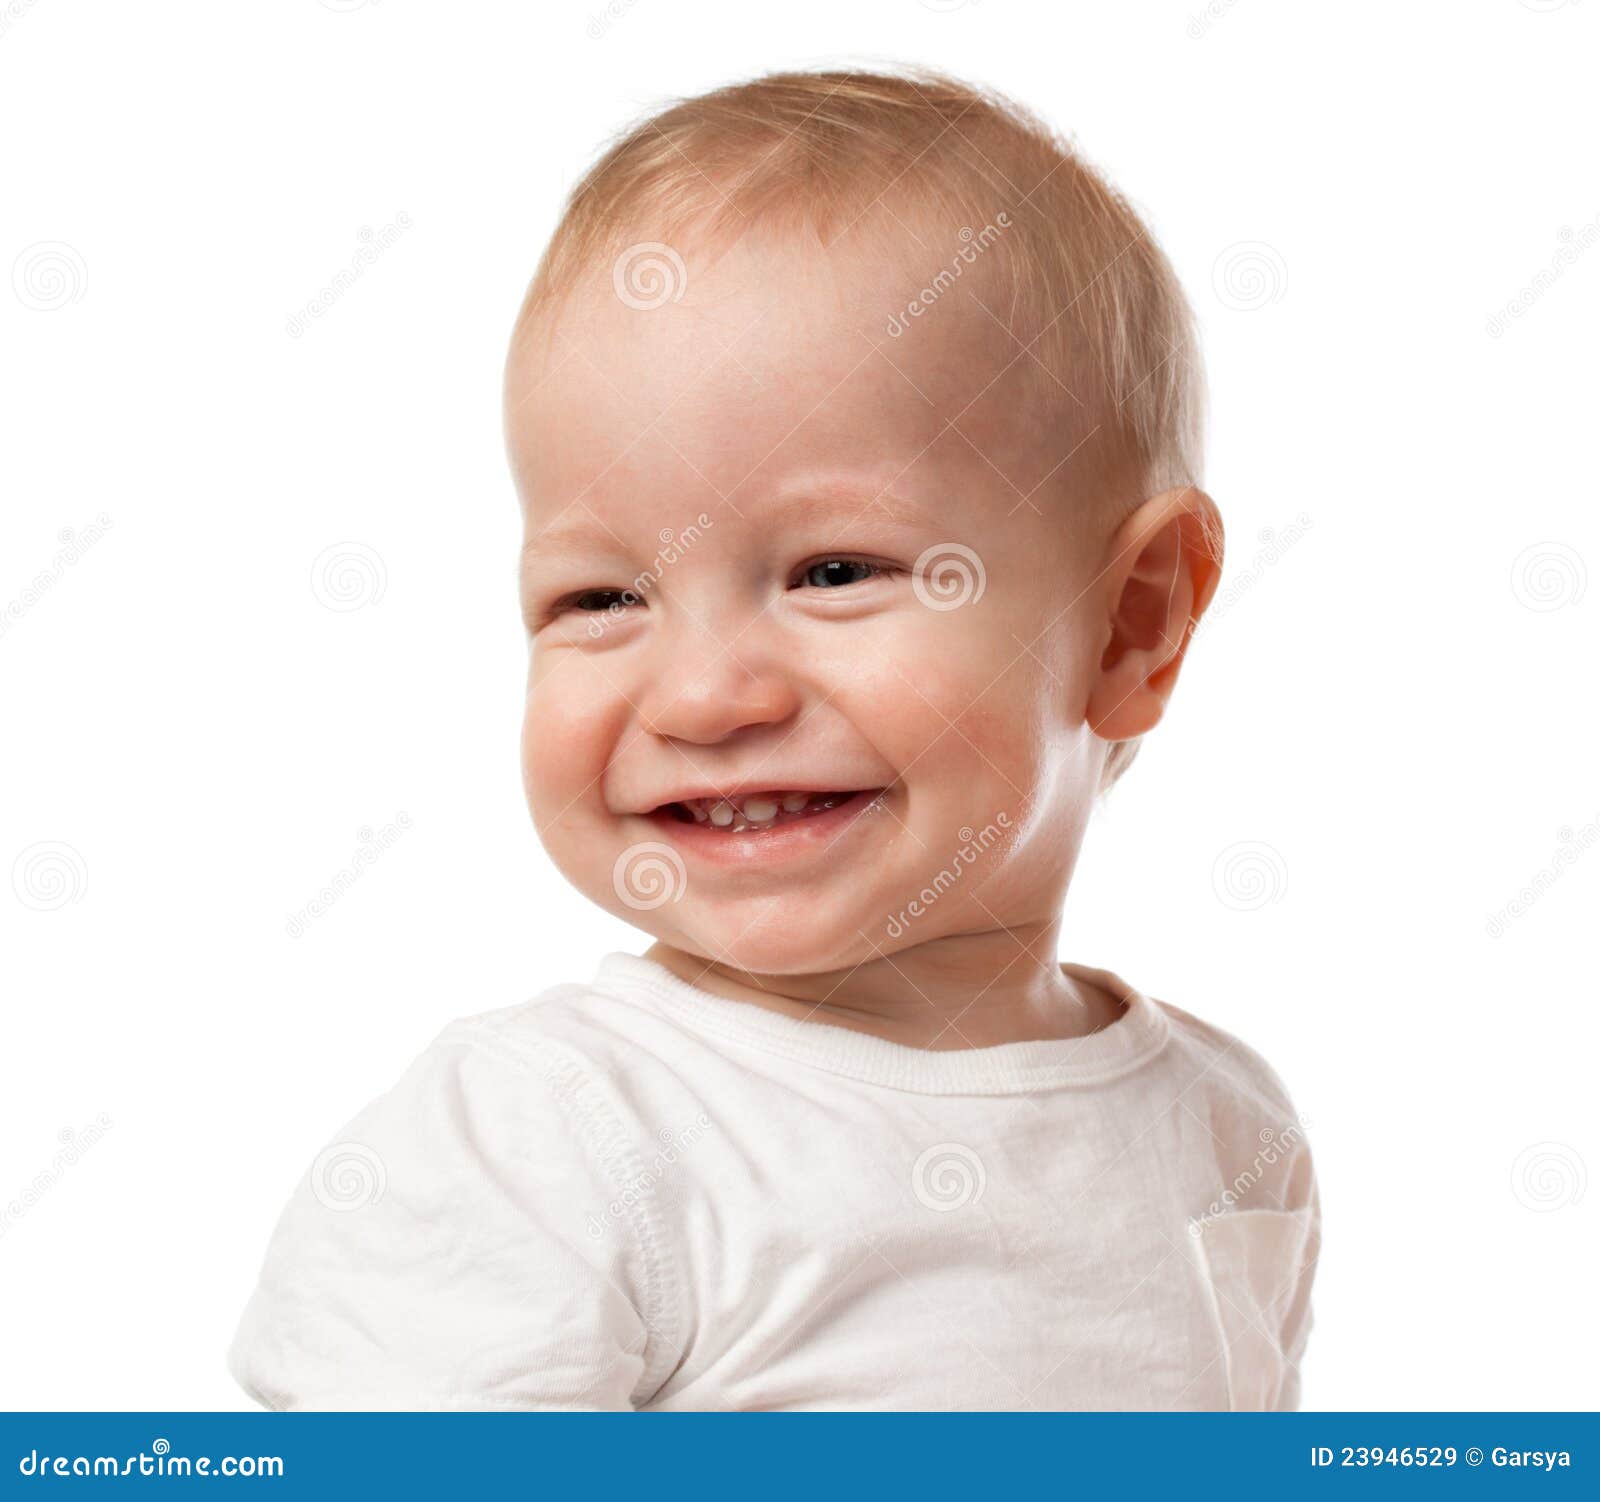 Baby boy stock image. Image of teeth, baby, toddler, shirt - 23946529